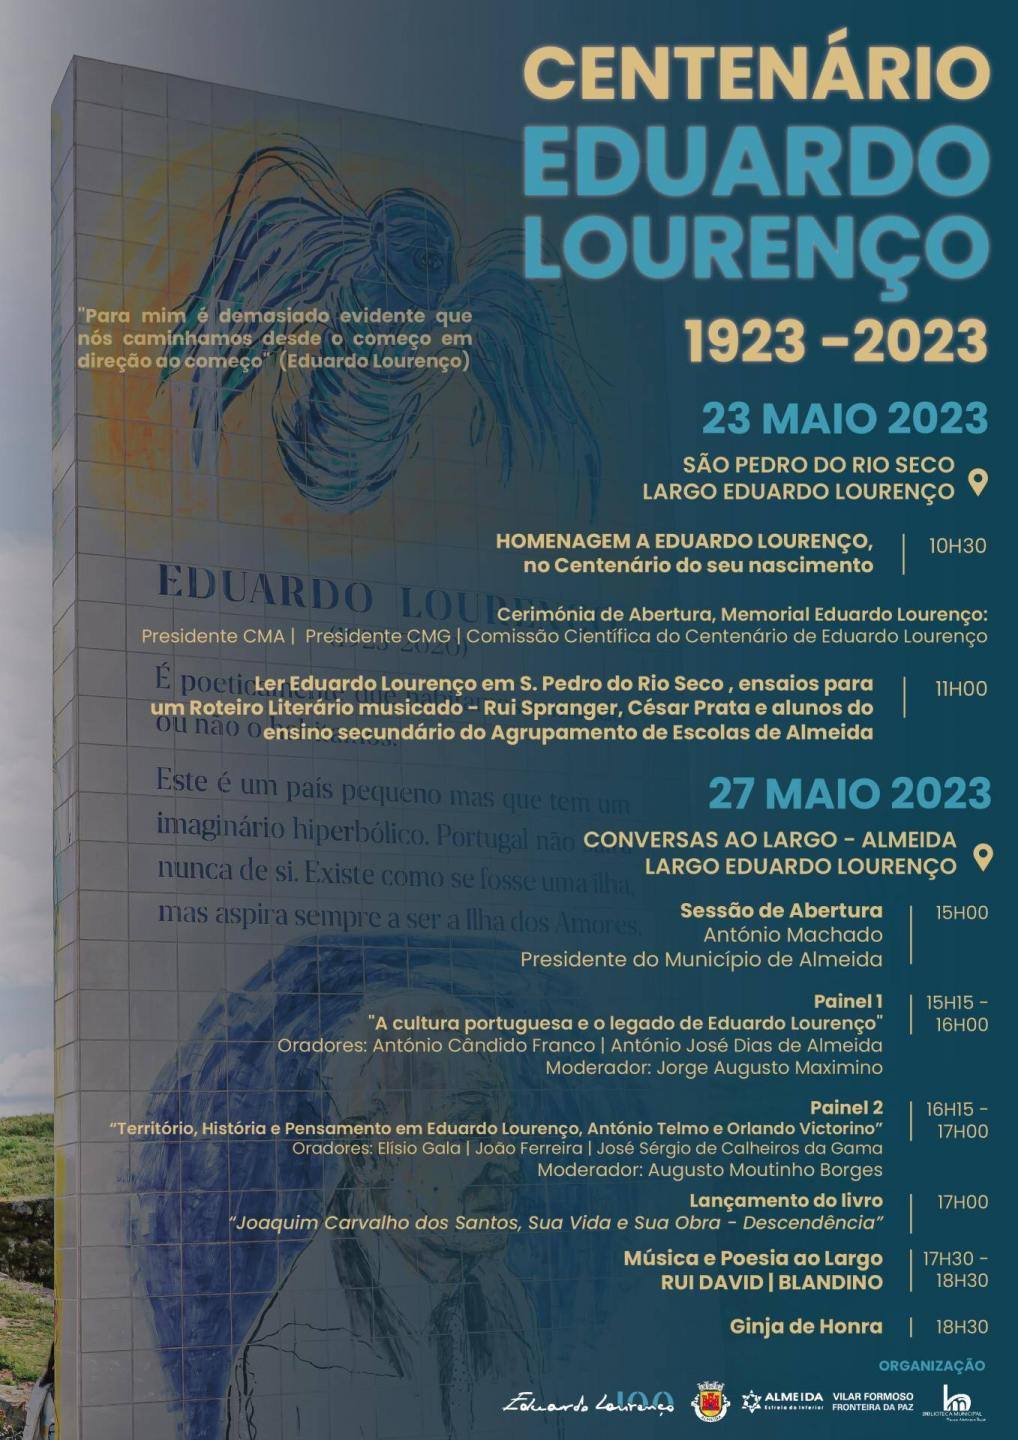 Centenario Eduardo Lourenco Prancheta 1 Cópia 2